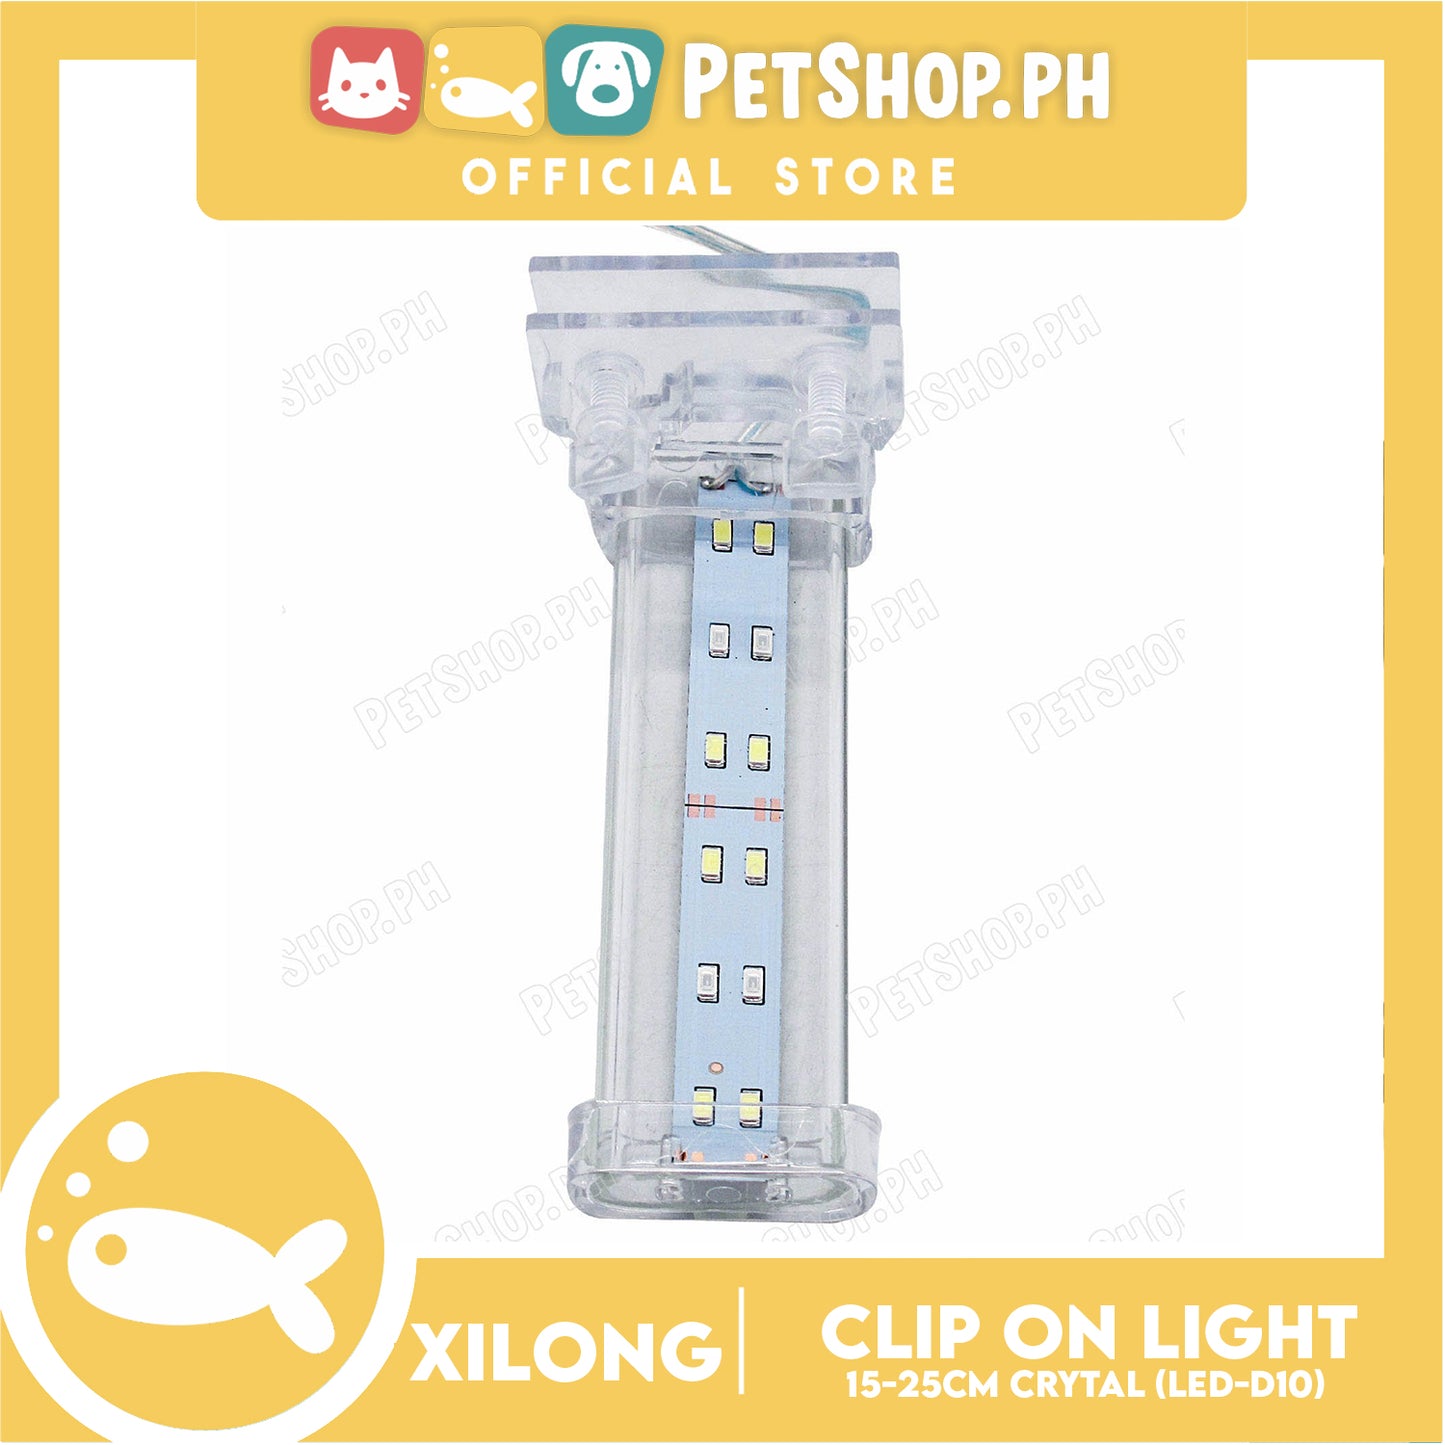 LED-D10 Crystal Clip on Light 4W